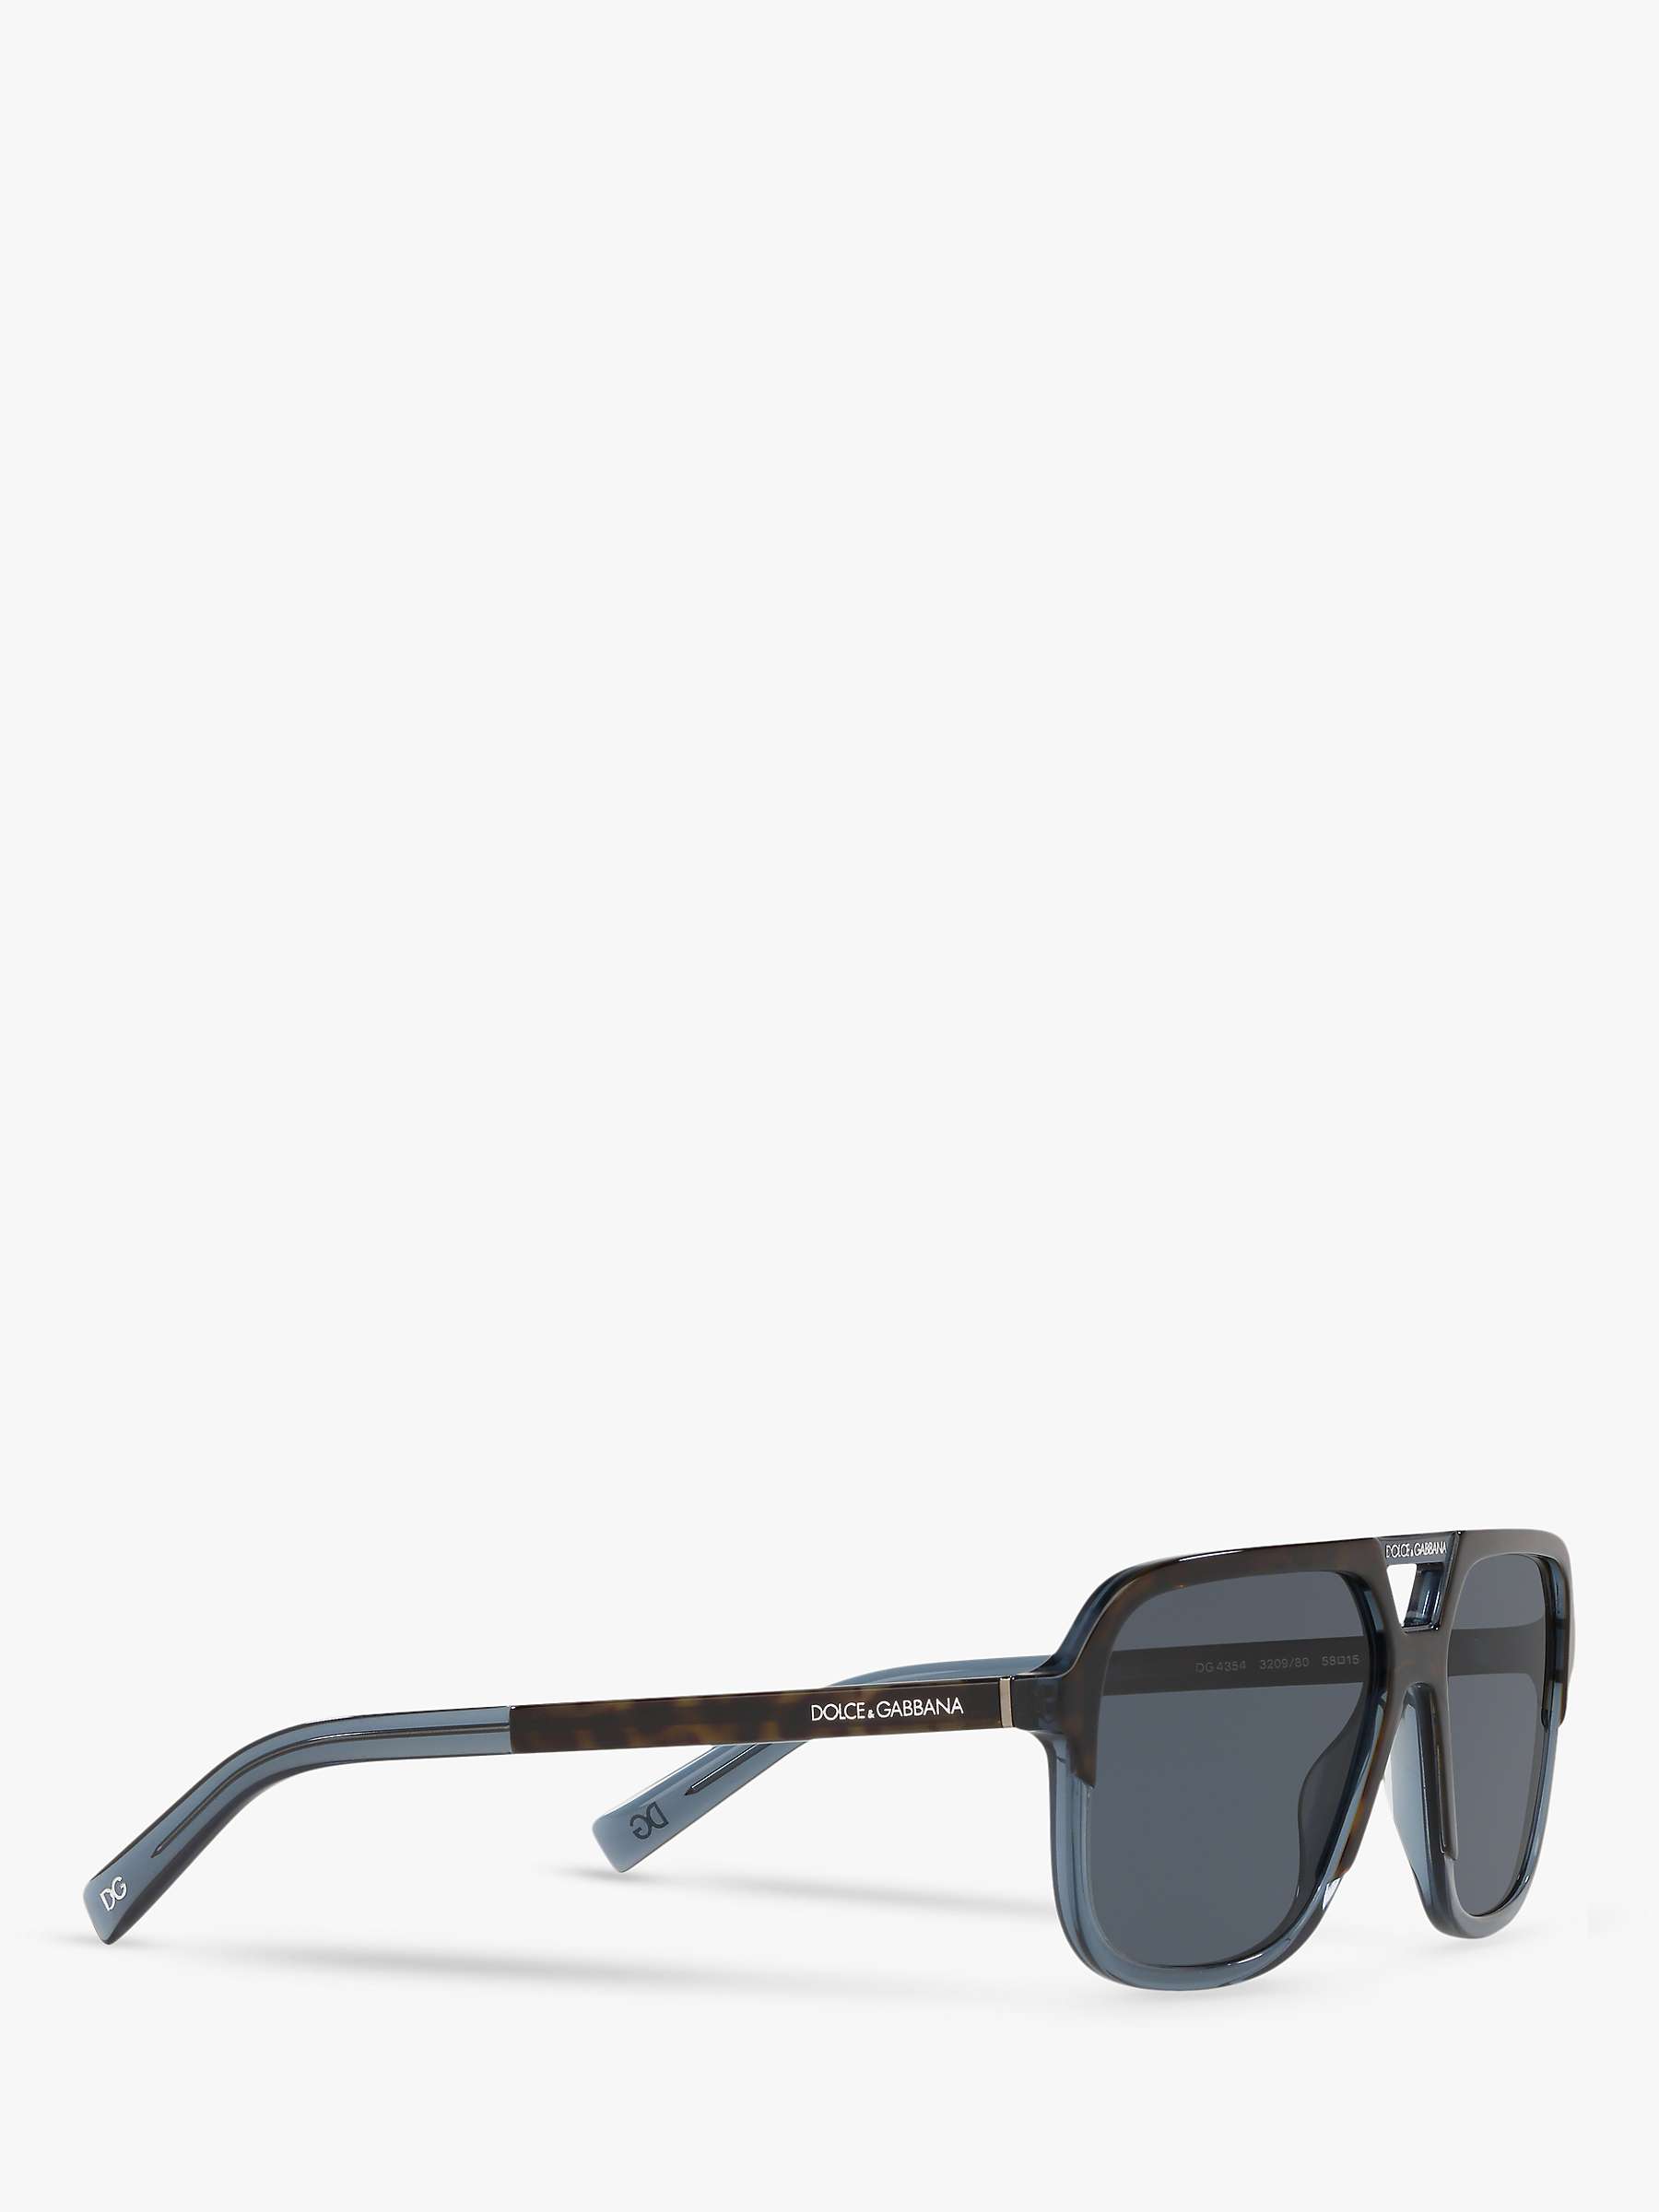 Buy Dolce & Gabbana DG4354 Men's Square Sunglasses, Brown/Blue Online at johnlewis.com